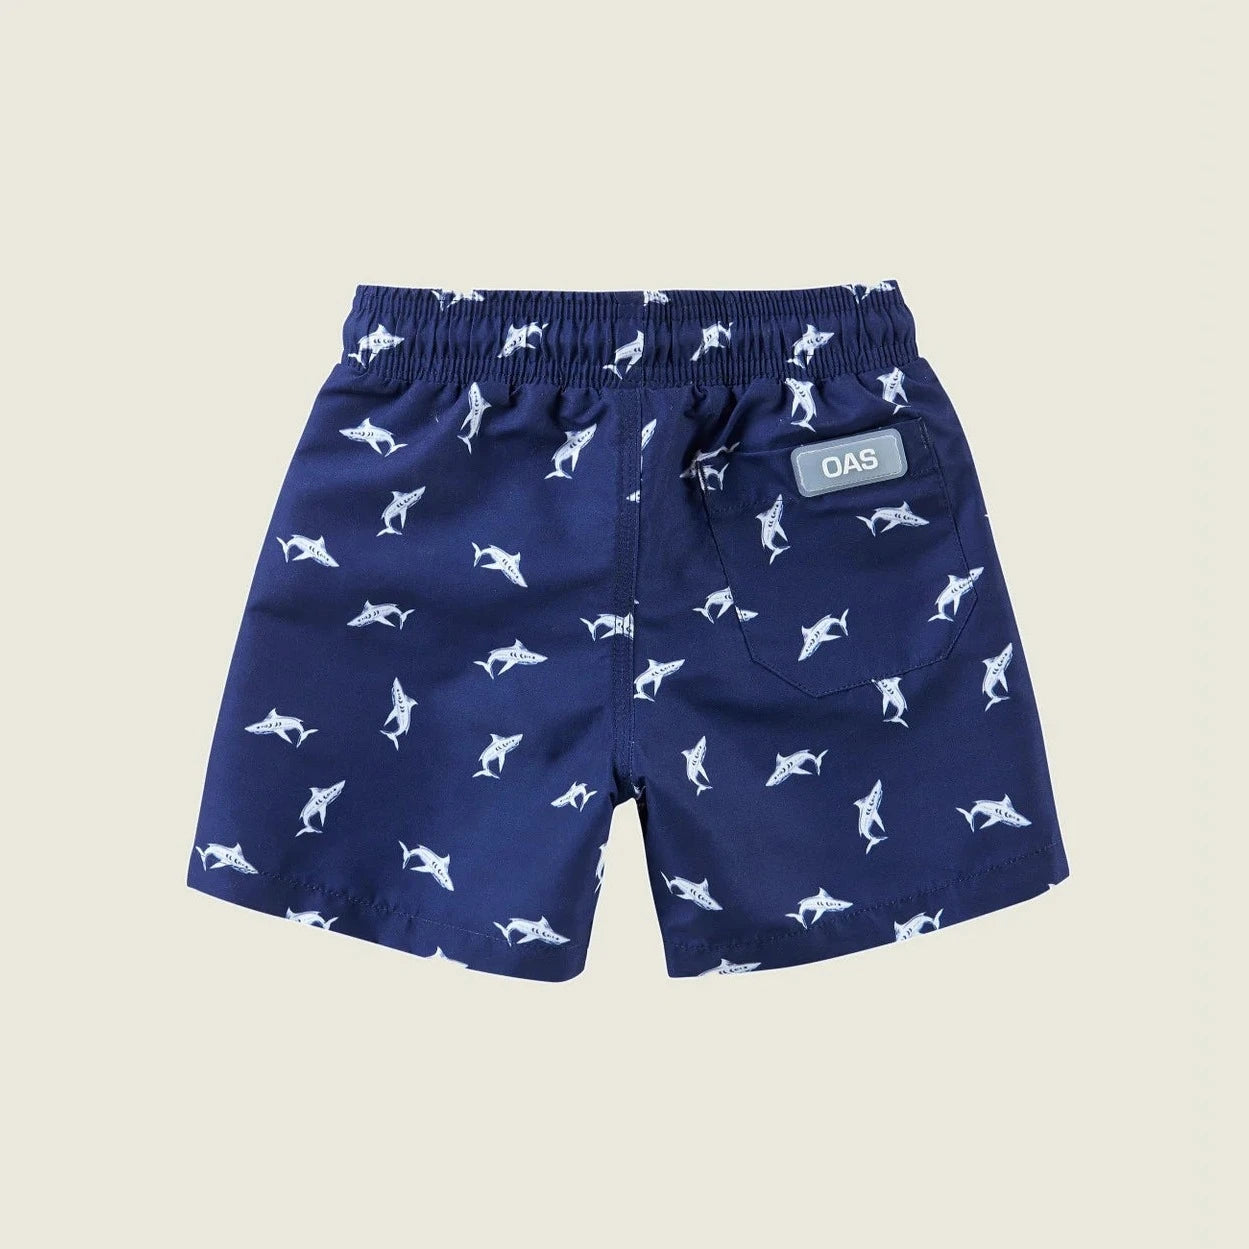 Oas - Sharks Swim Shorts